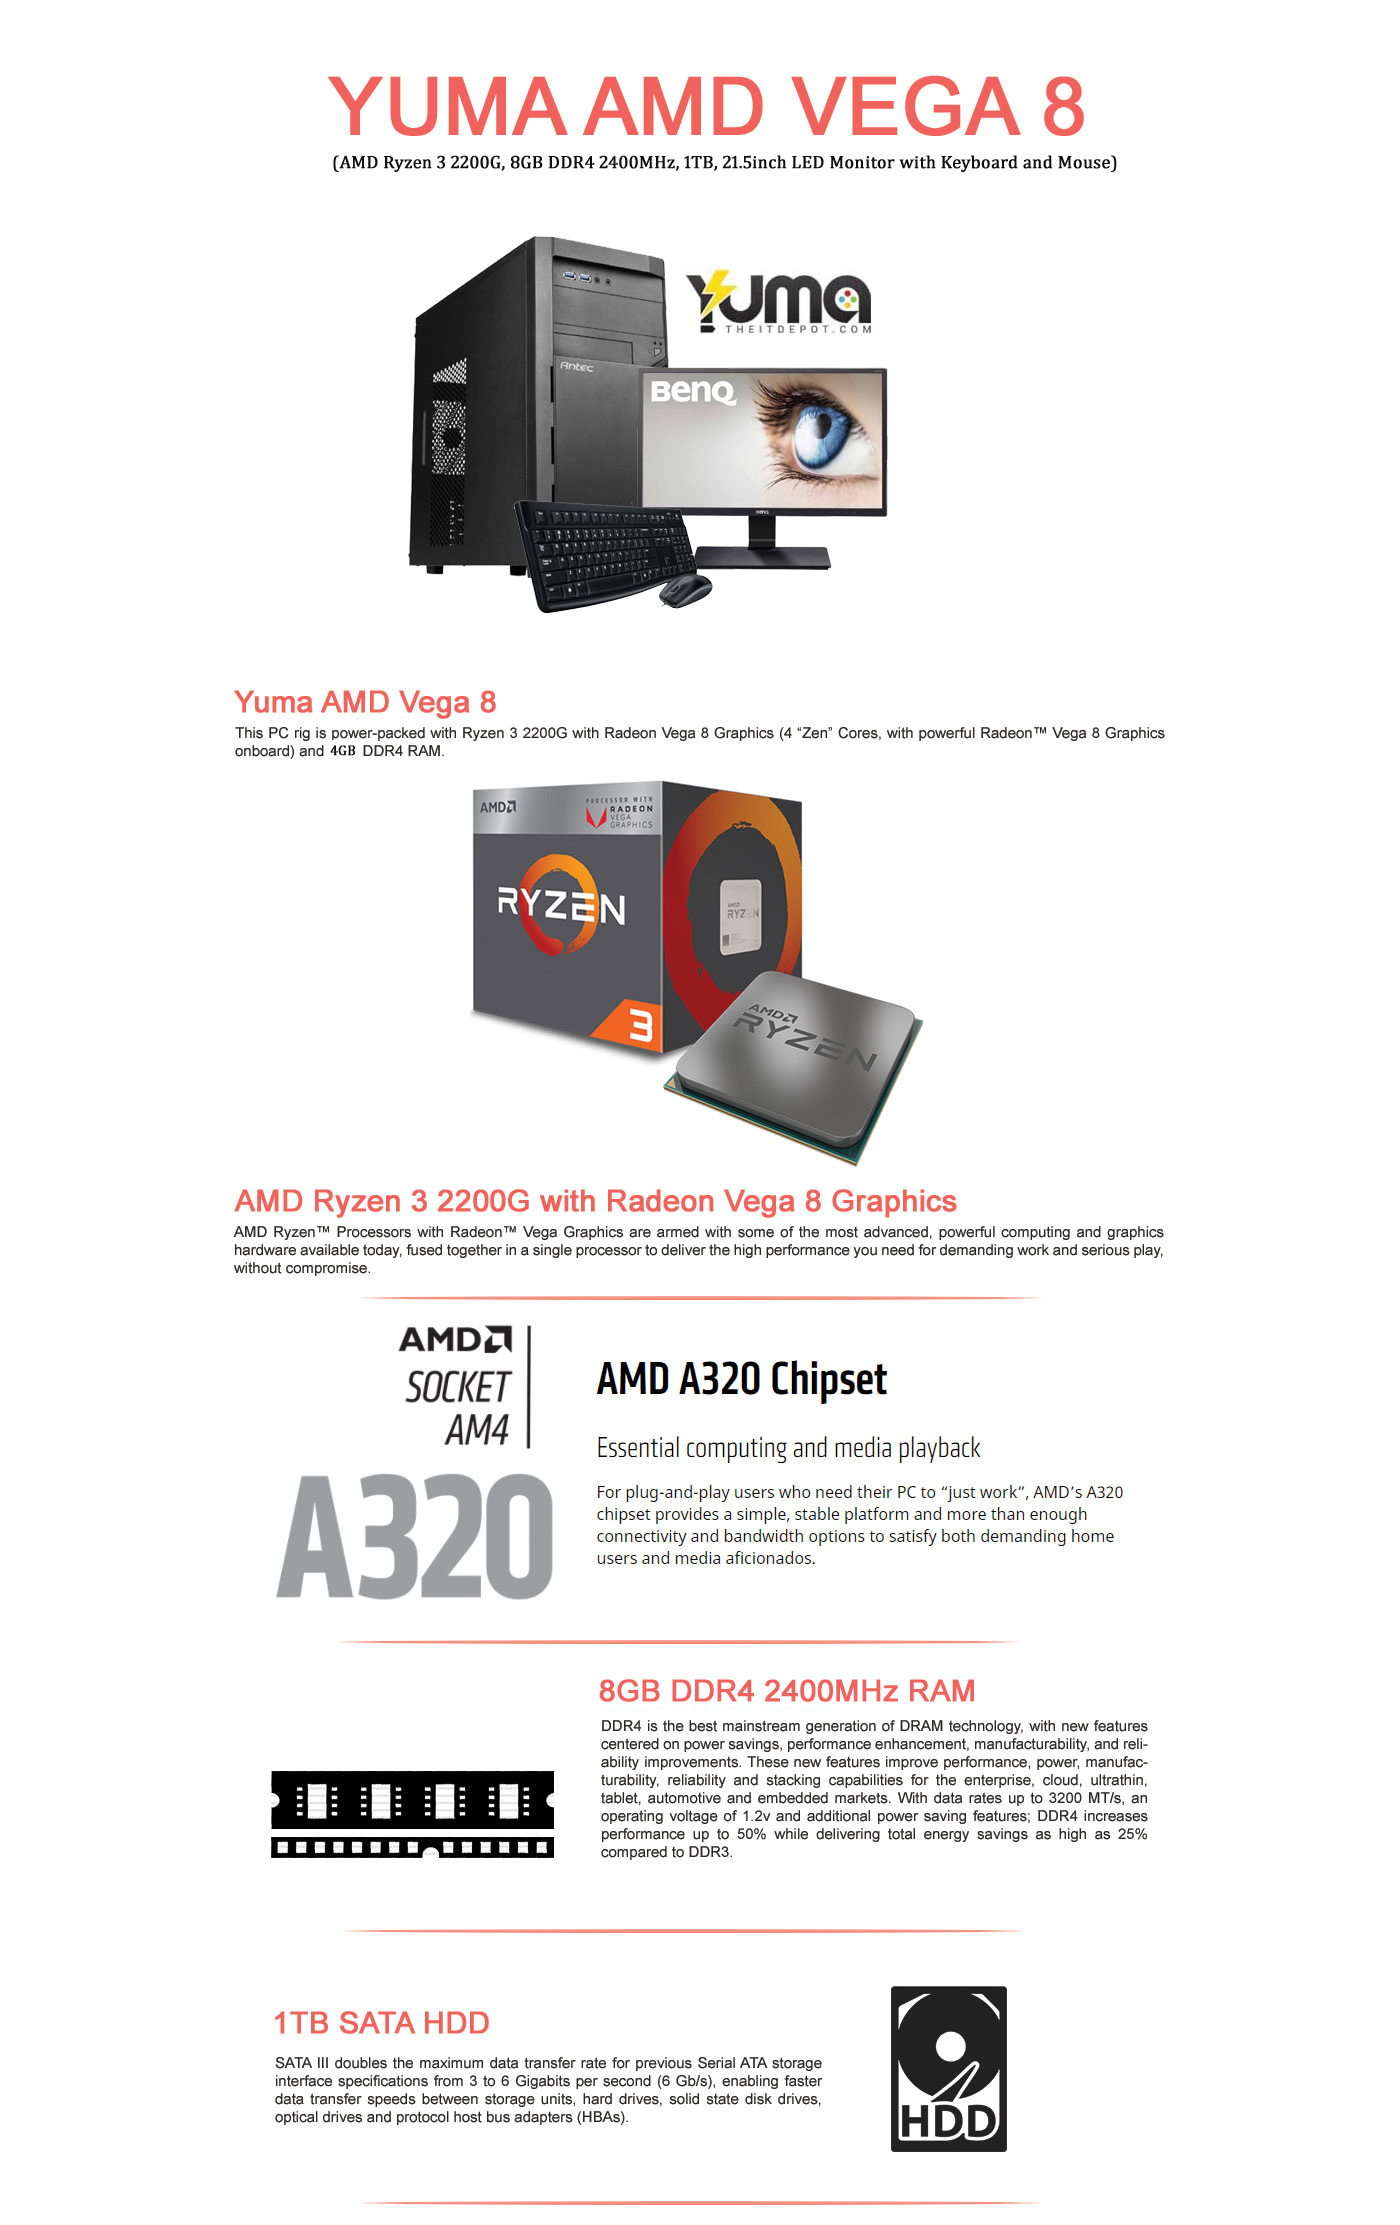  Buy Online Yuma AMD Vega 8 (AMD Ryzen 3 2200G, 4GB DDR4 2400MHz, 1TB, 21.5inch LED Monitor with Keyboard and Mouse)